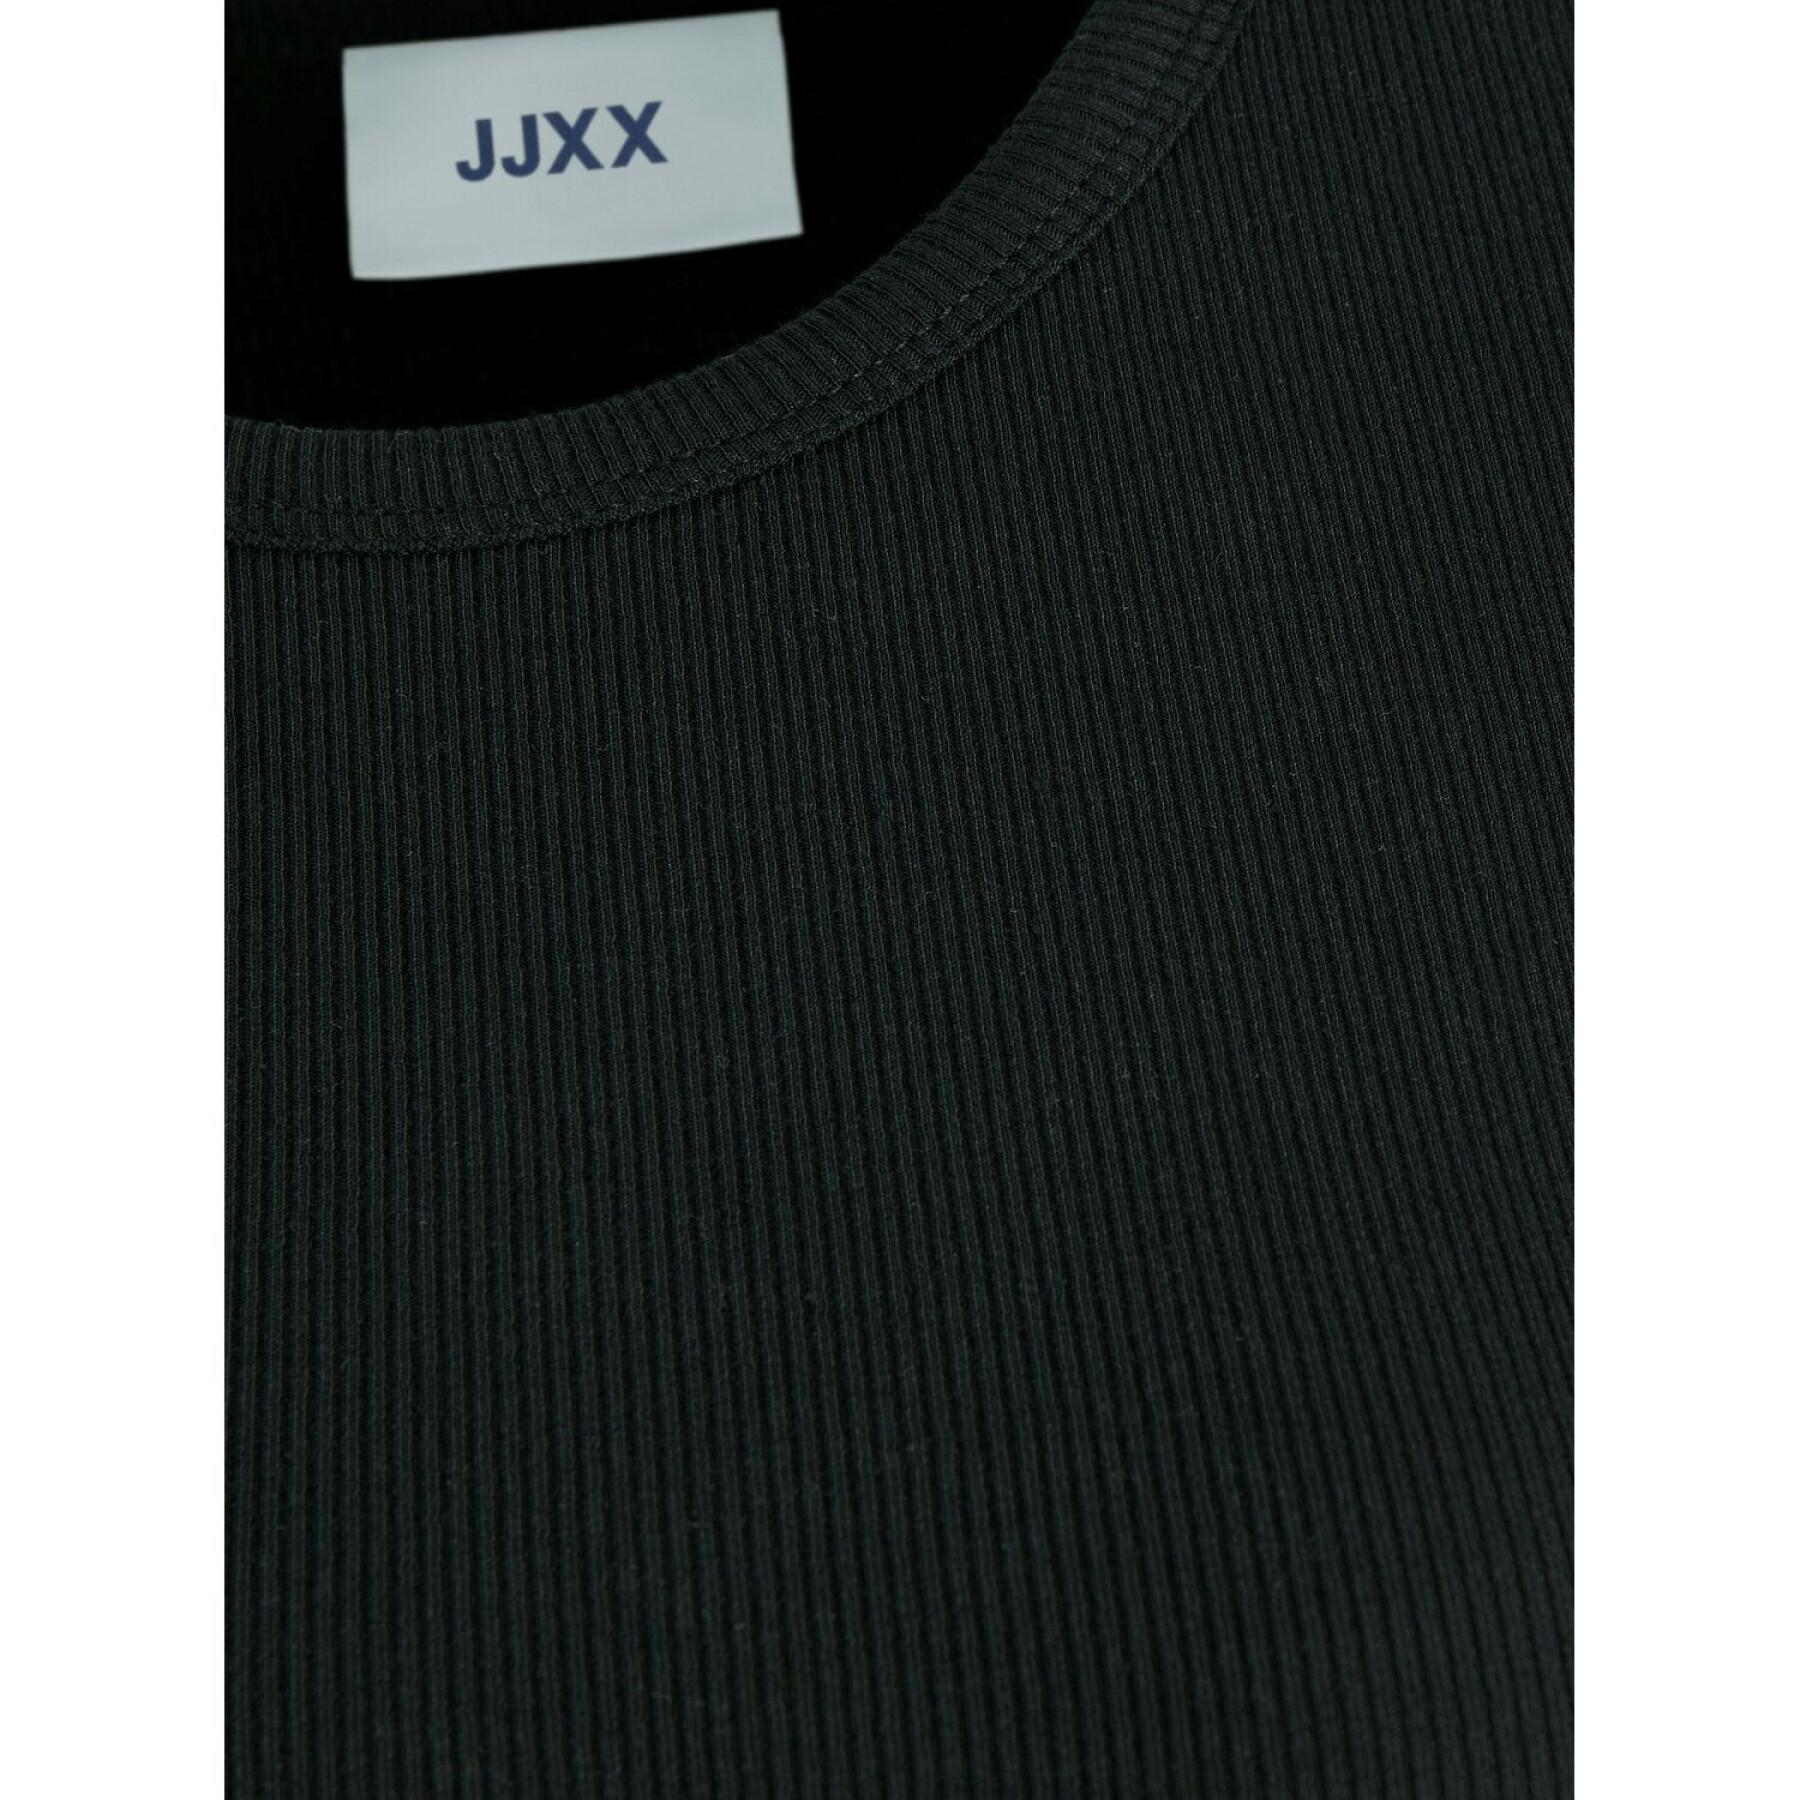 Camiseta de mujer JJXX feline